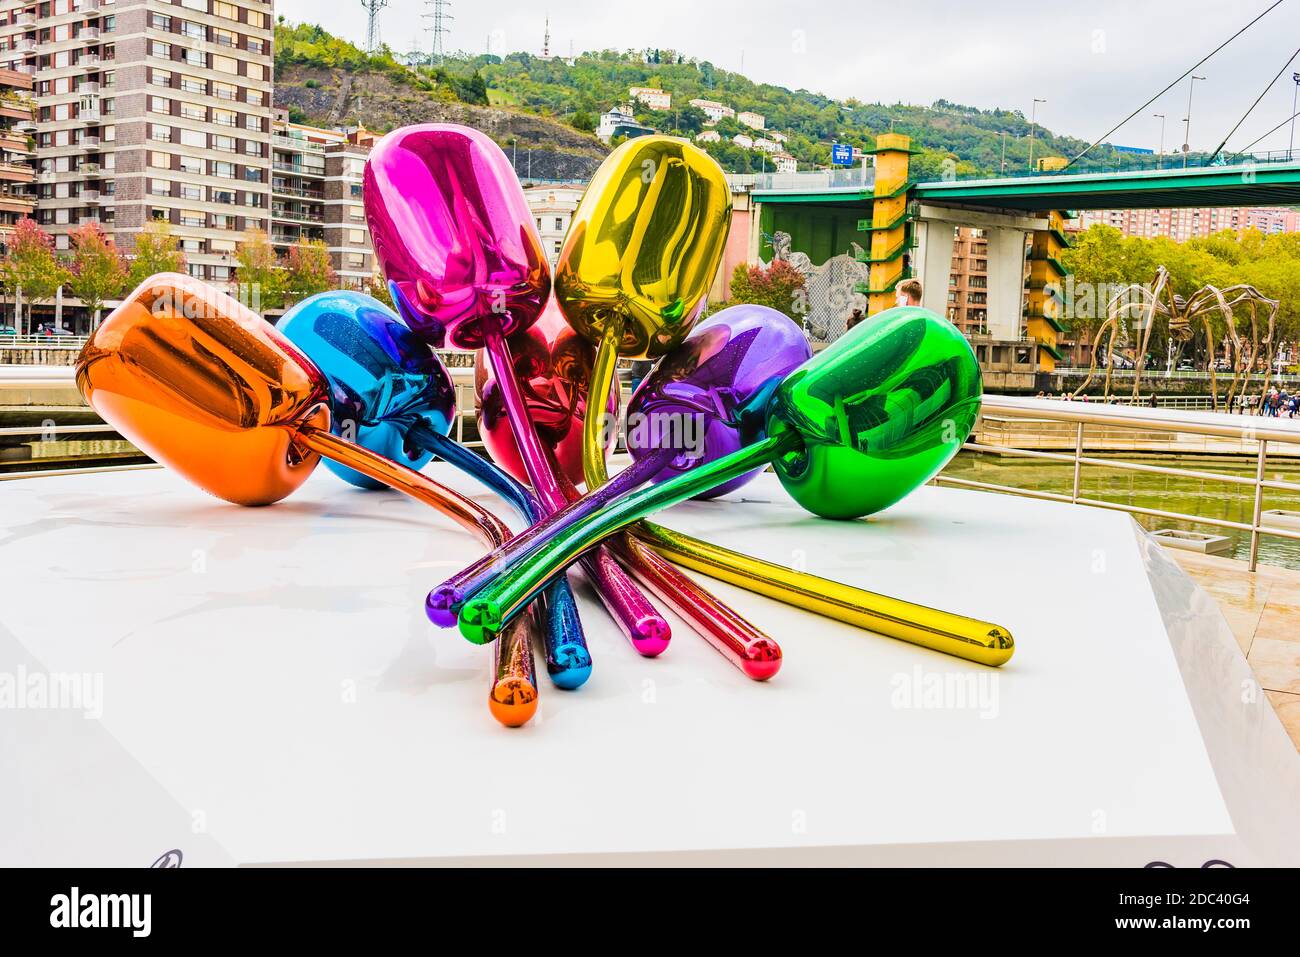 Tulpen von Jeff Koons, hochglanzpolierter Edelstahl mit transparenter Farbbeschichtung, Museumssammlung, Guggenheim Museum. Bilbao, Biskaya, Baskenland Cou Stockfoto